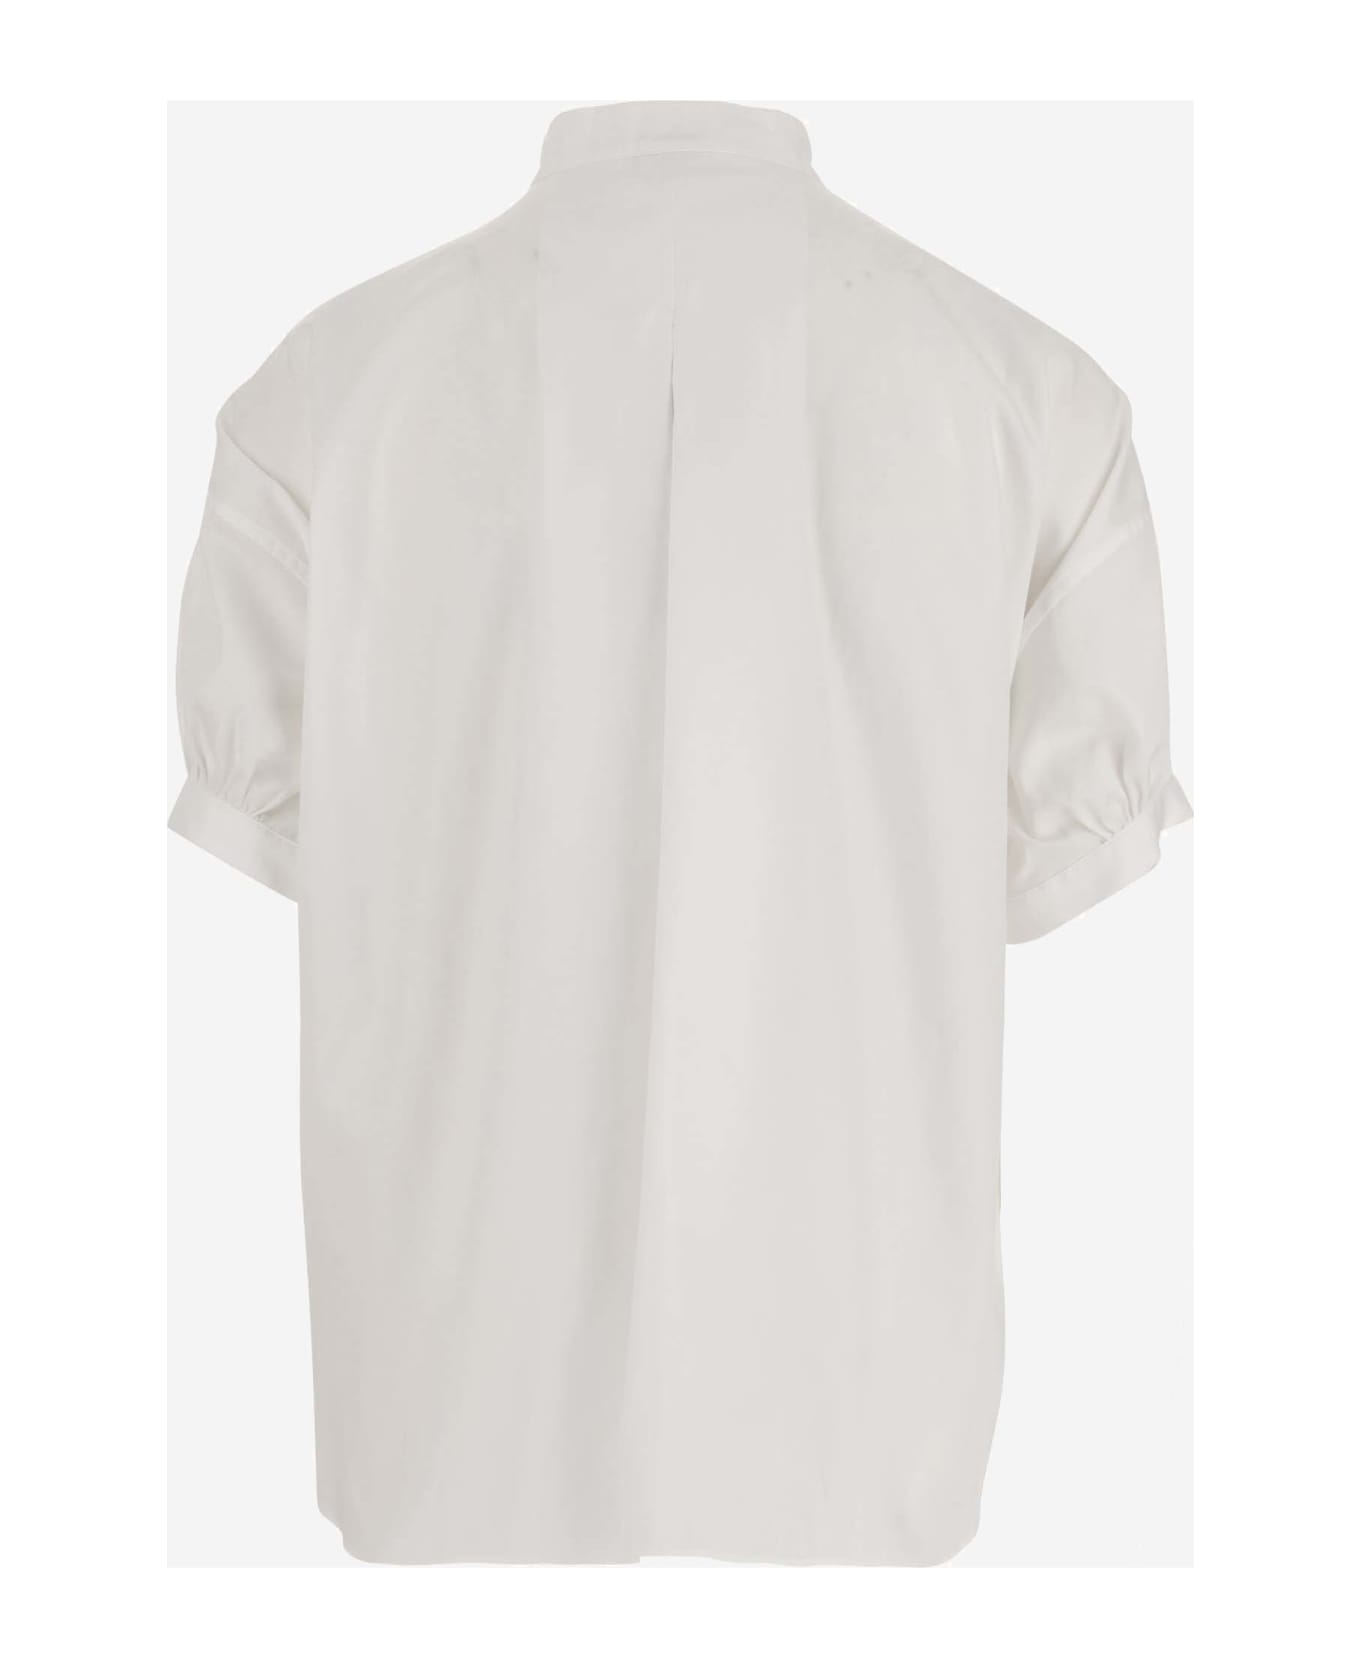 Aspesi Cotton Shirt - White